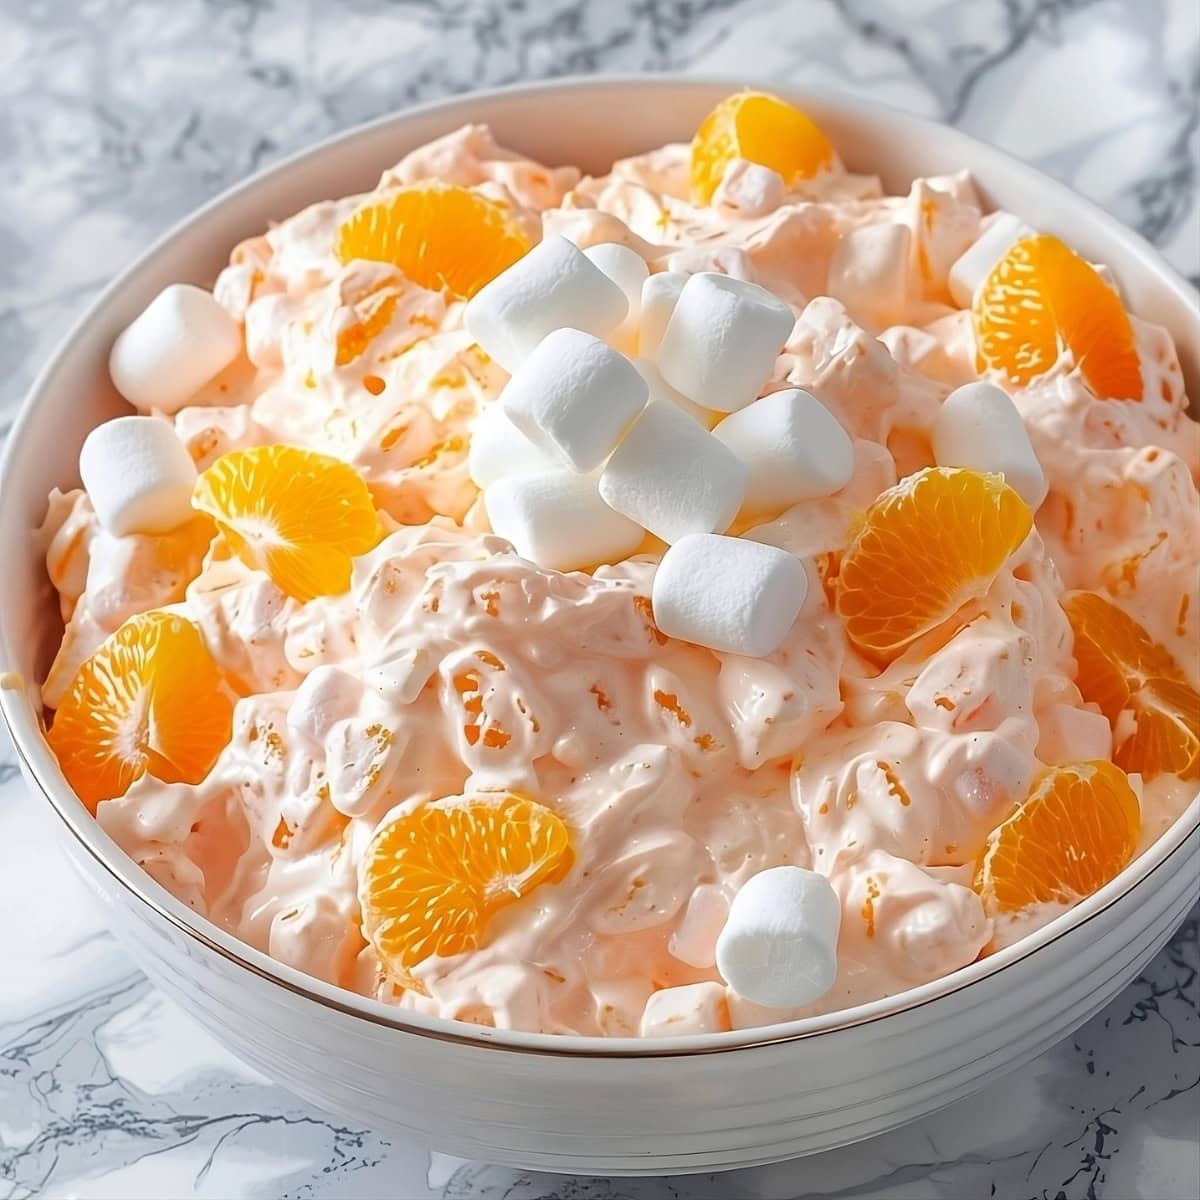 Orange fluff salad in a white bowl garnished with mini marshmallows and fresh orange.